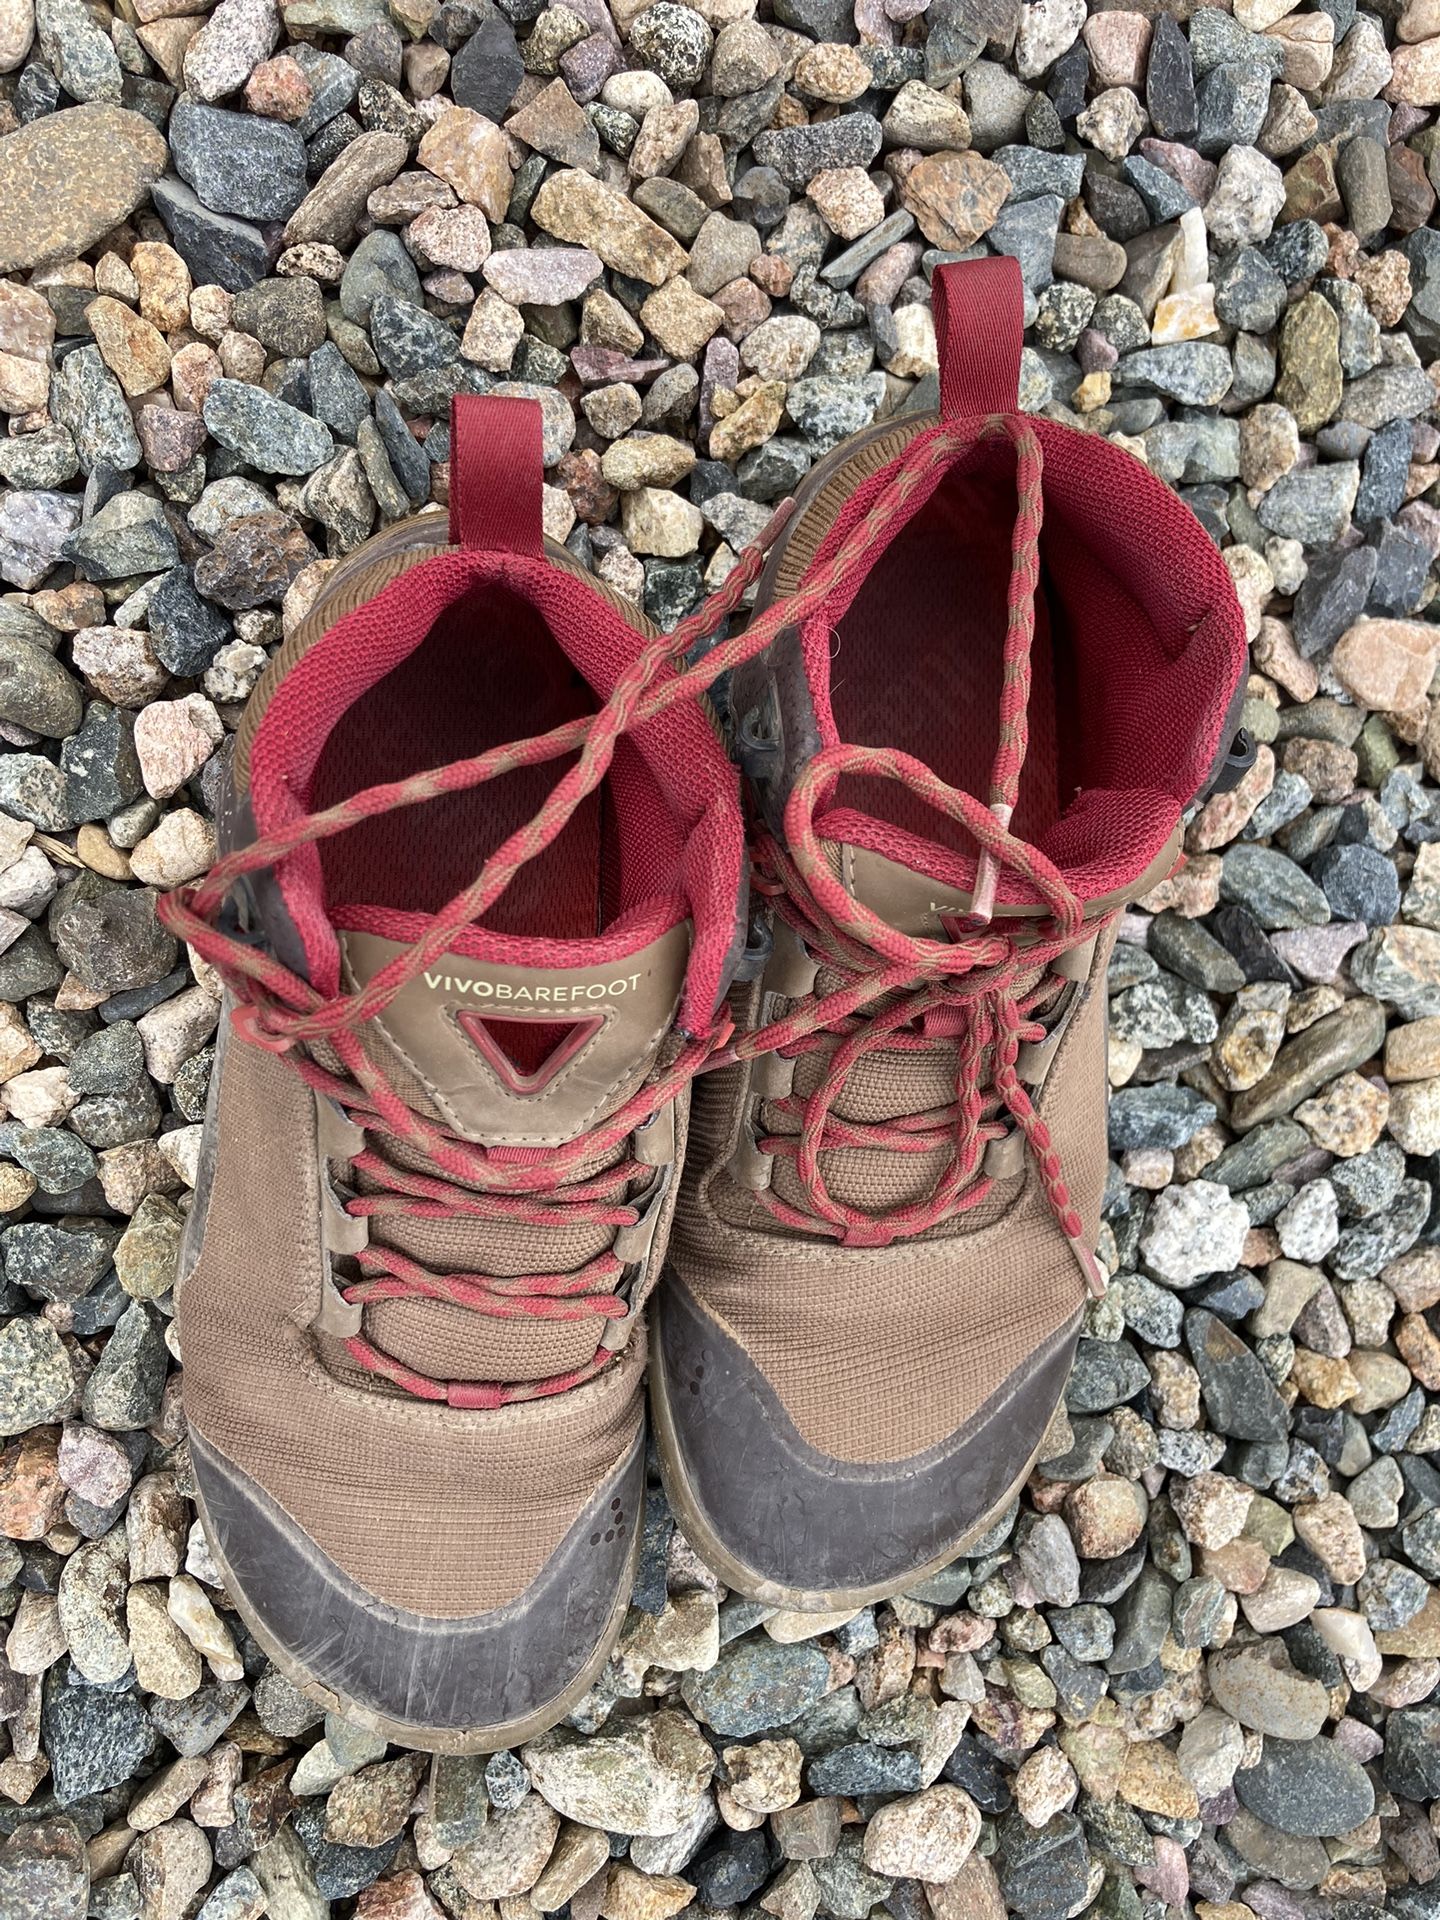 Hiking Boots, Women’s Size 8, Vivobarefoot 